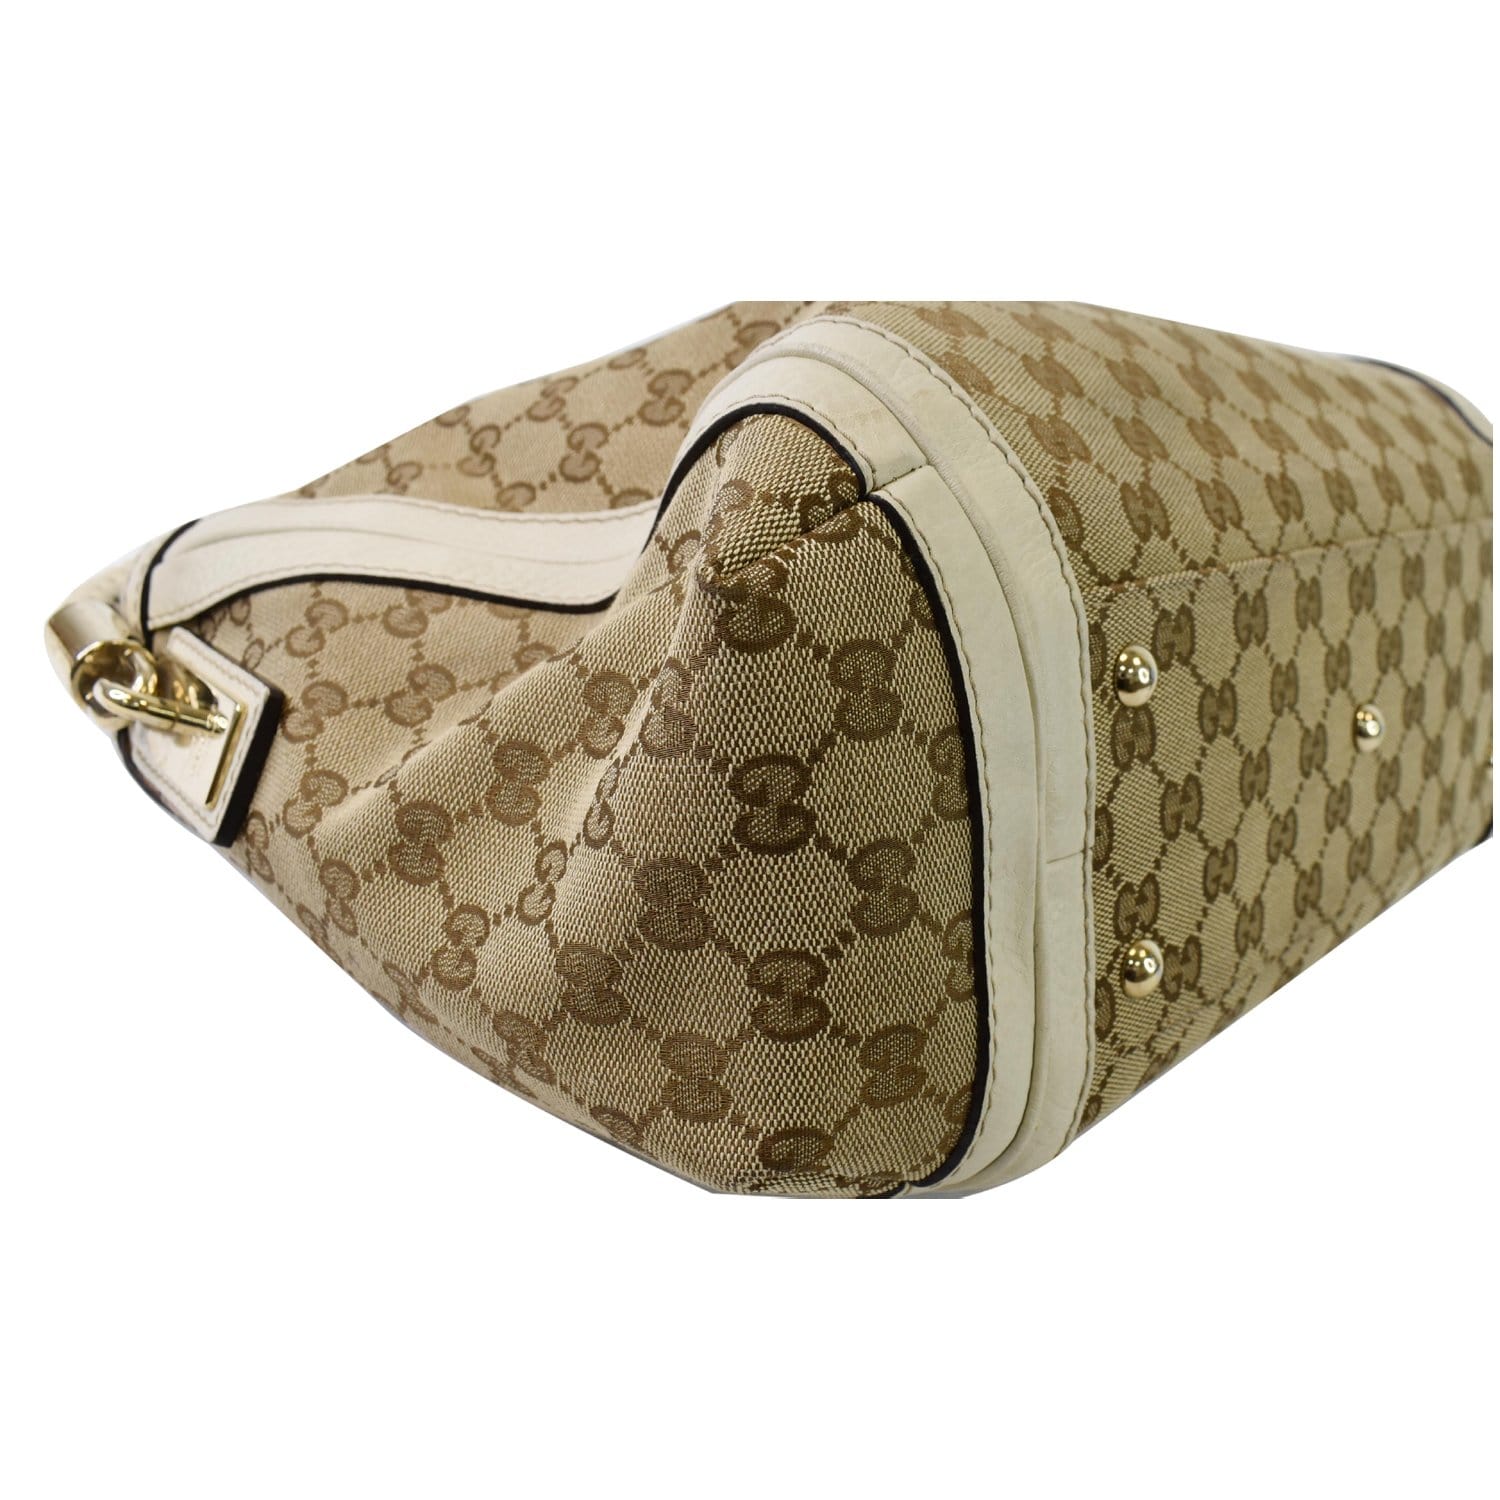 Authentic Gucci Heritage Hobo Handbag | eBay